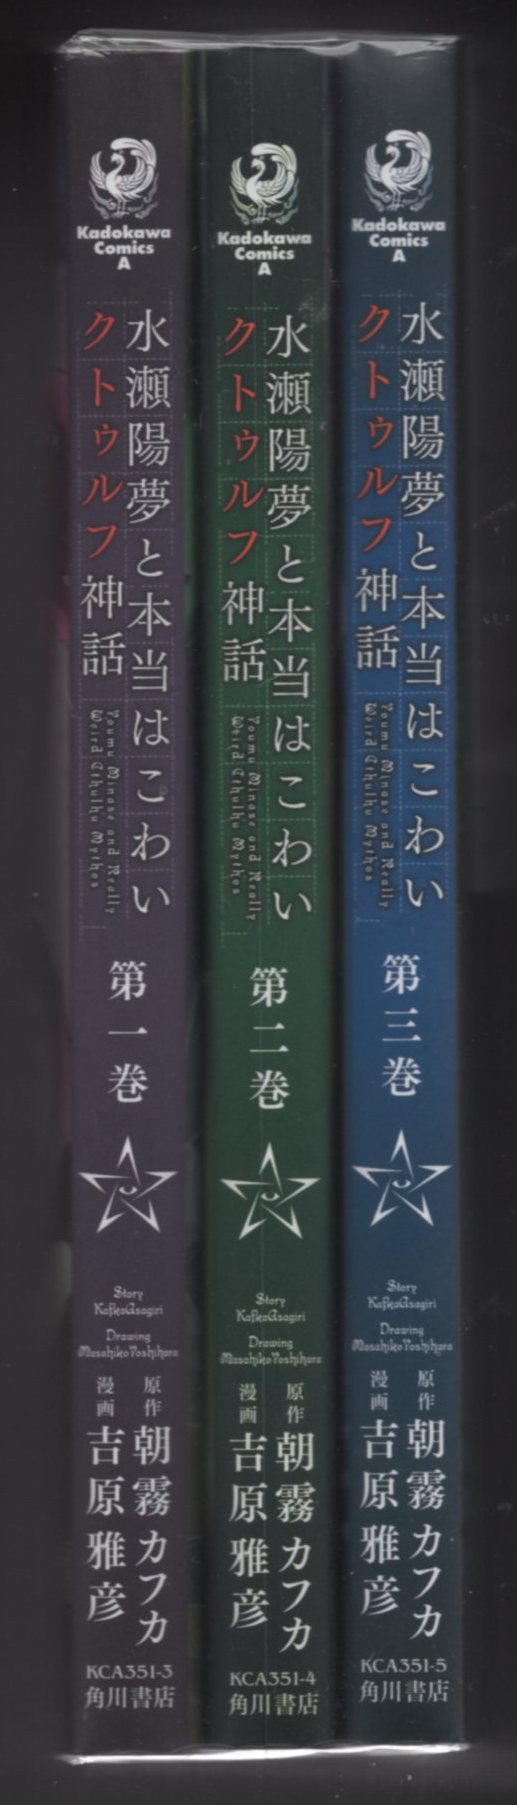 Kadokawa カドカワコミックスa 吉原雅彦 水瀬陽夢と本当はこわいクトゥルフ神話 全3巻 初版セット まんだらけ Mandarake